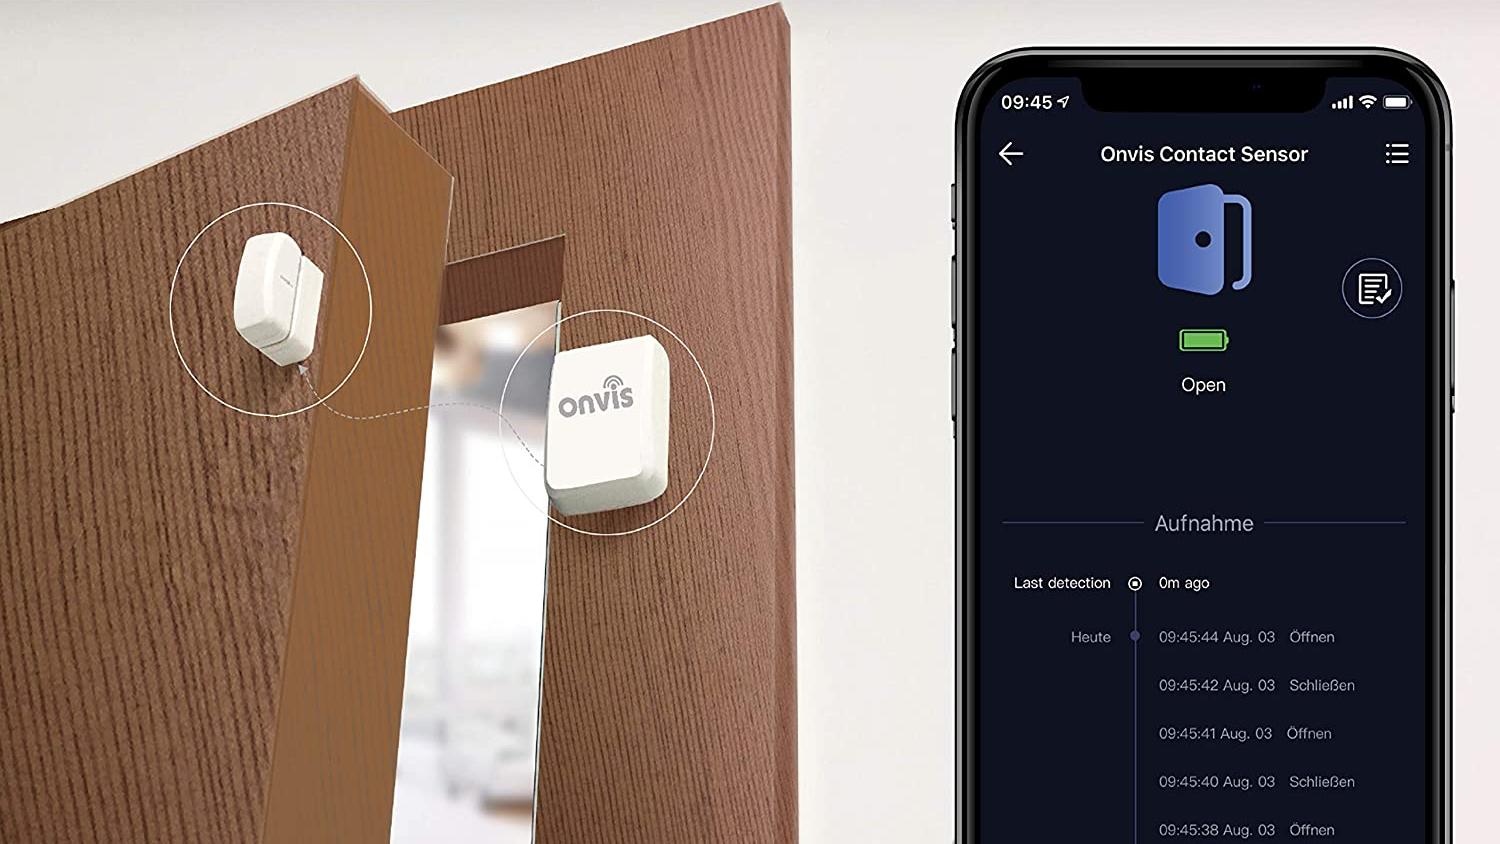 Onvis Ct2 Smart Contact Sensor and app